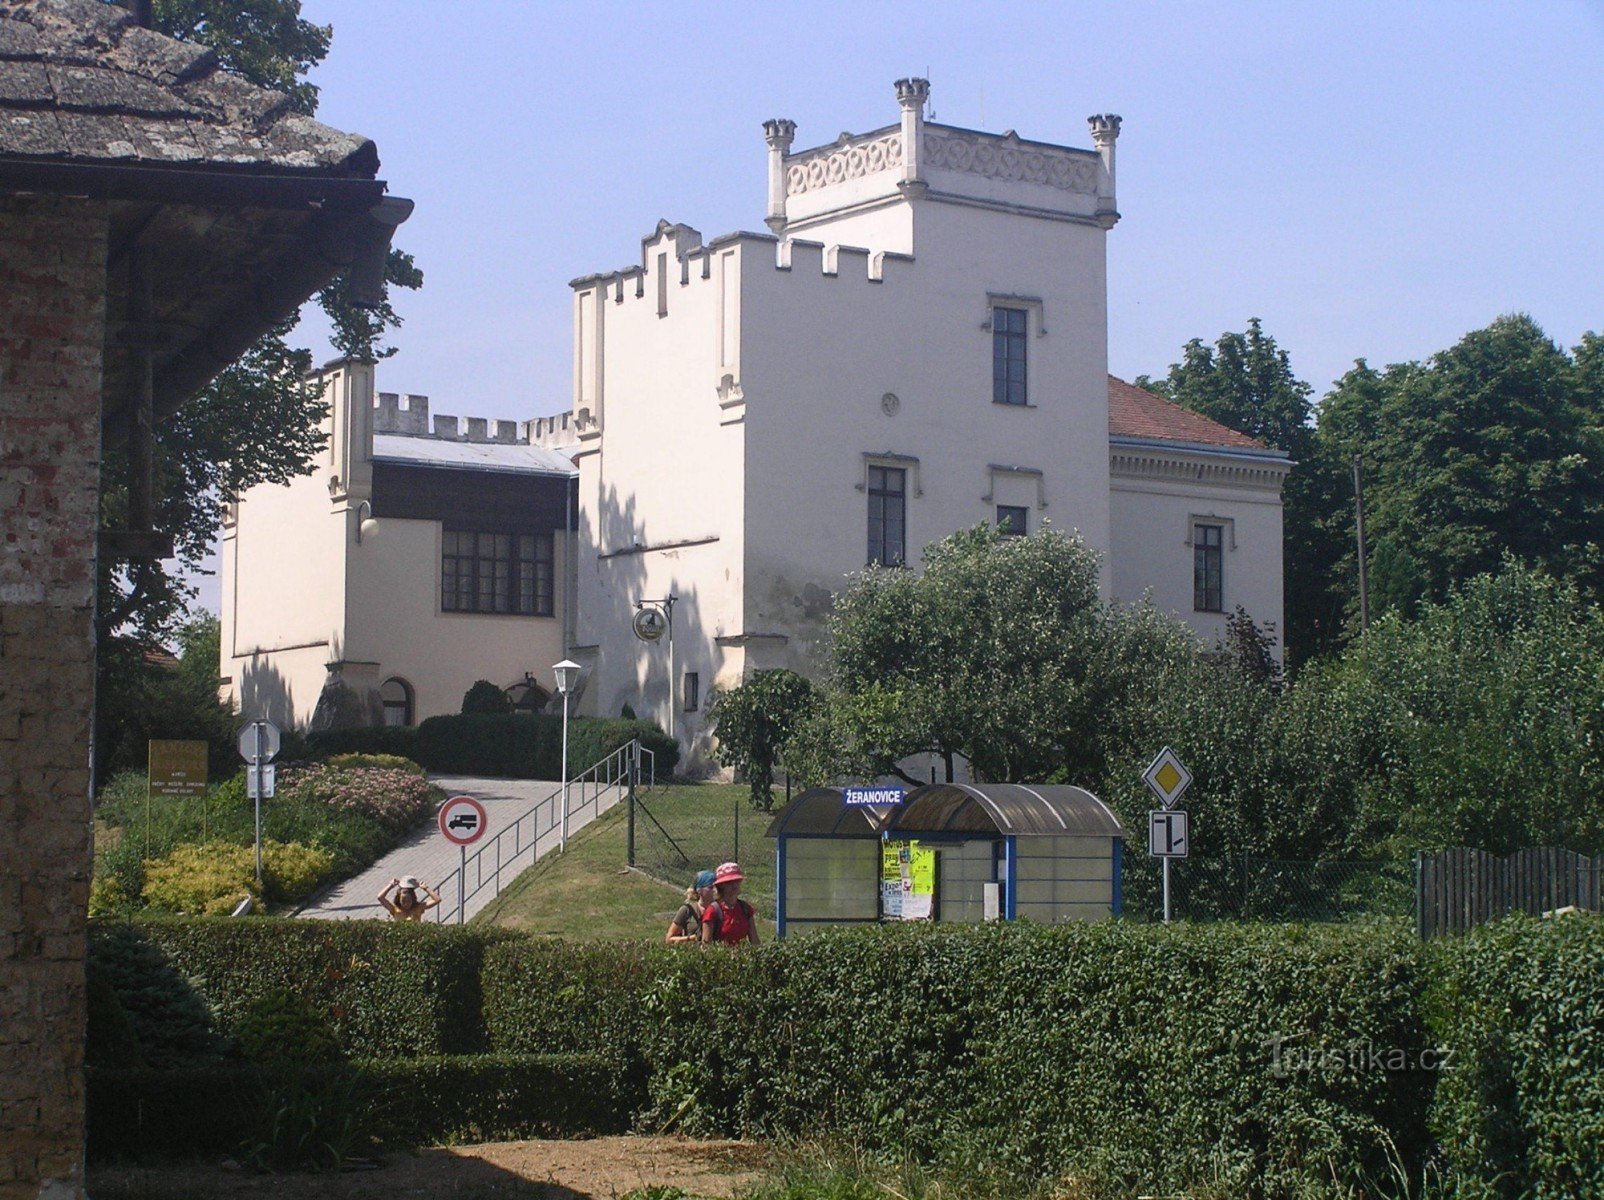 dvorac (restoran + općinski ured)